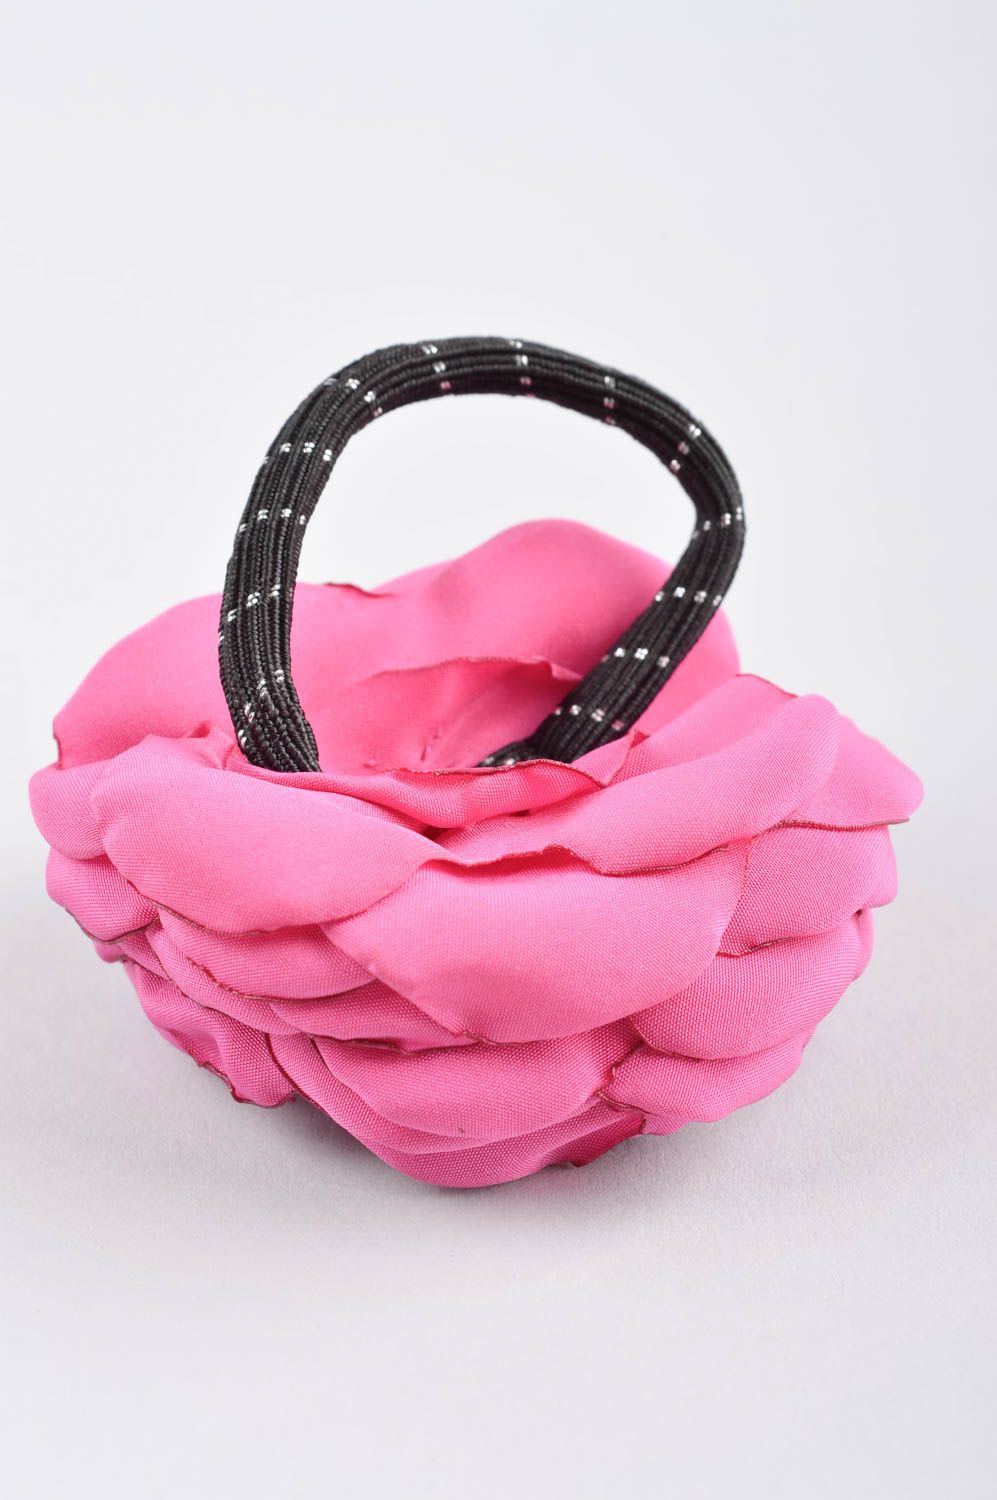 Handmade hair accessory hair band flower hair tie designer jewelry gift ideas photo 4